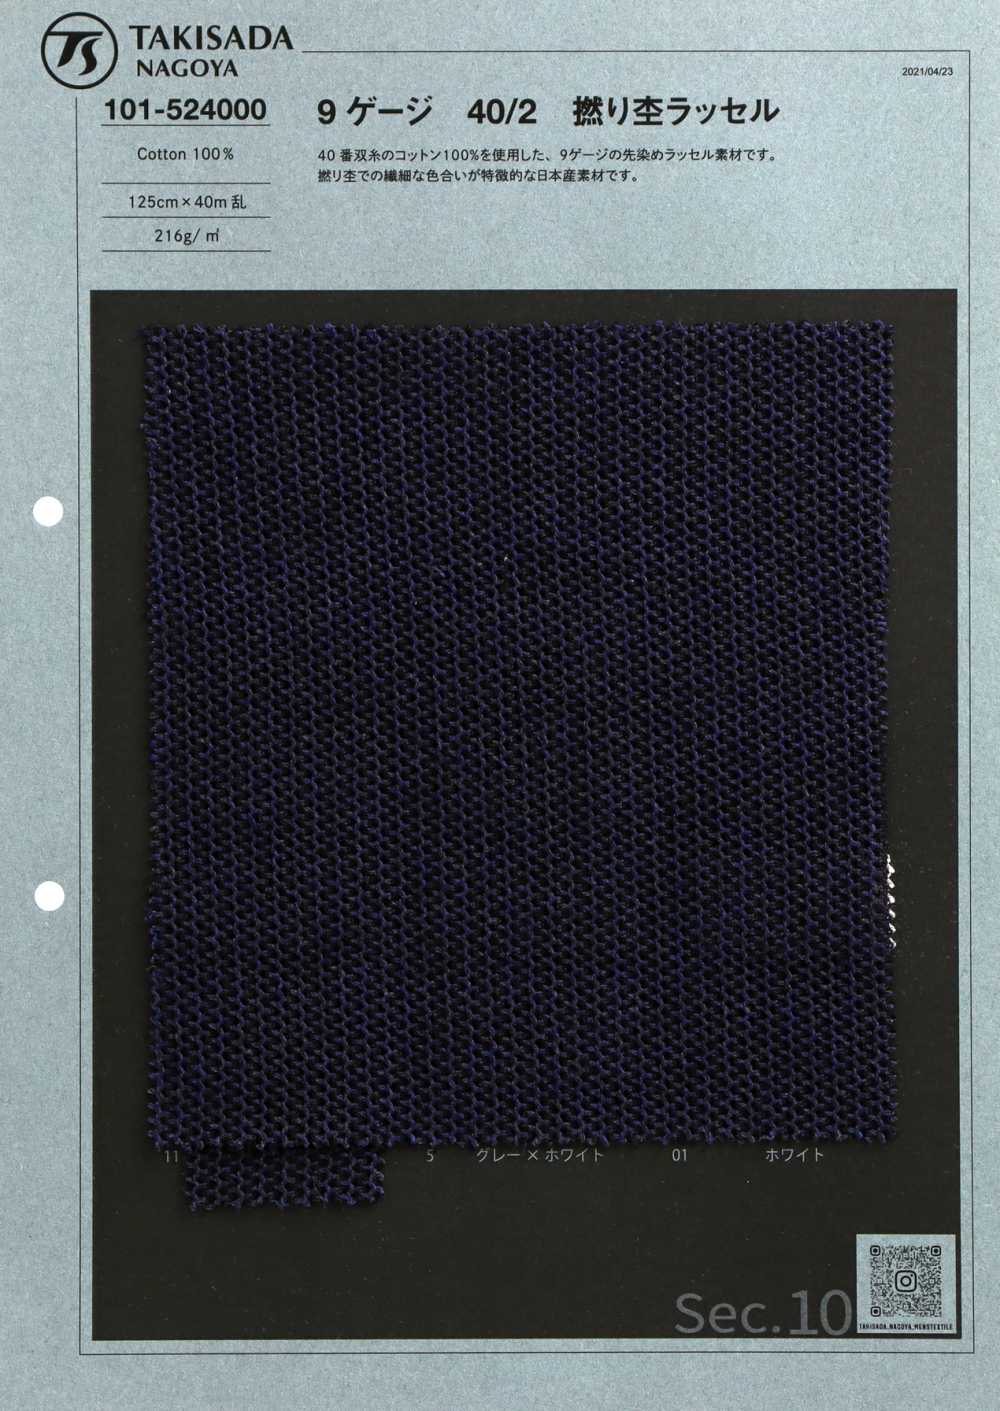 101-524000 9G 40/2 Twisted Heather Raschel[Textile / Fabric] Takisada Nagoya